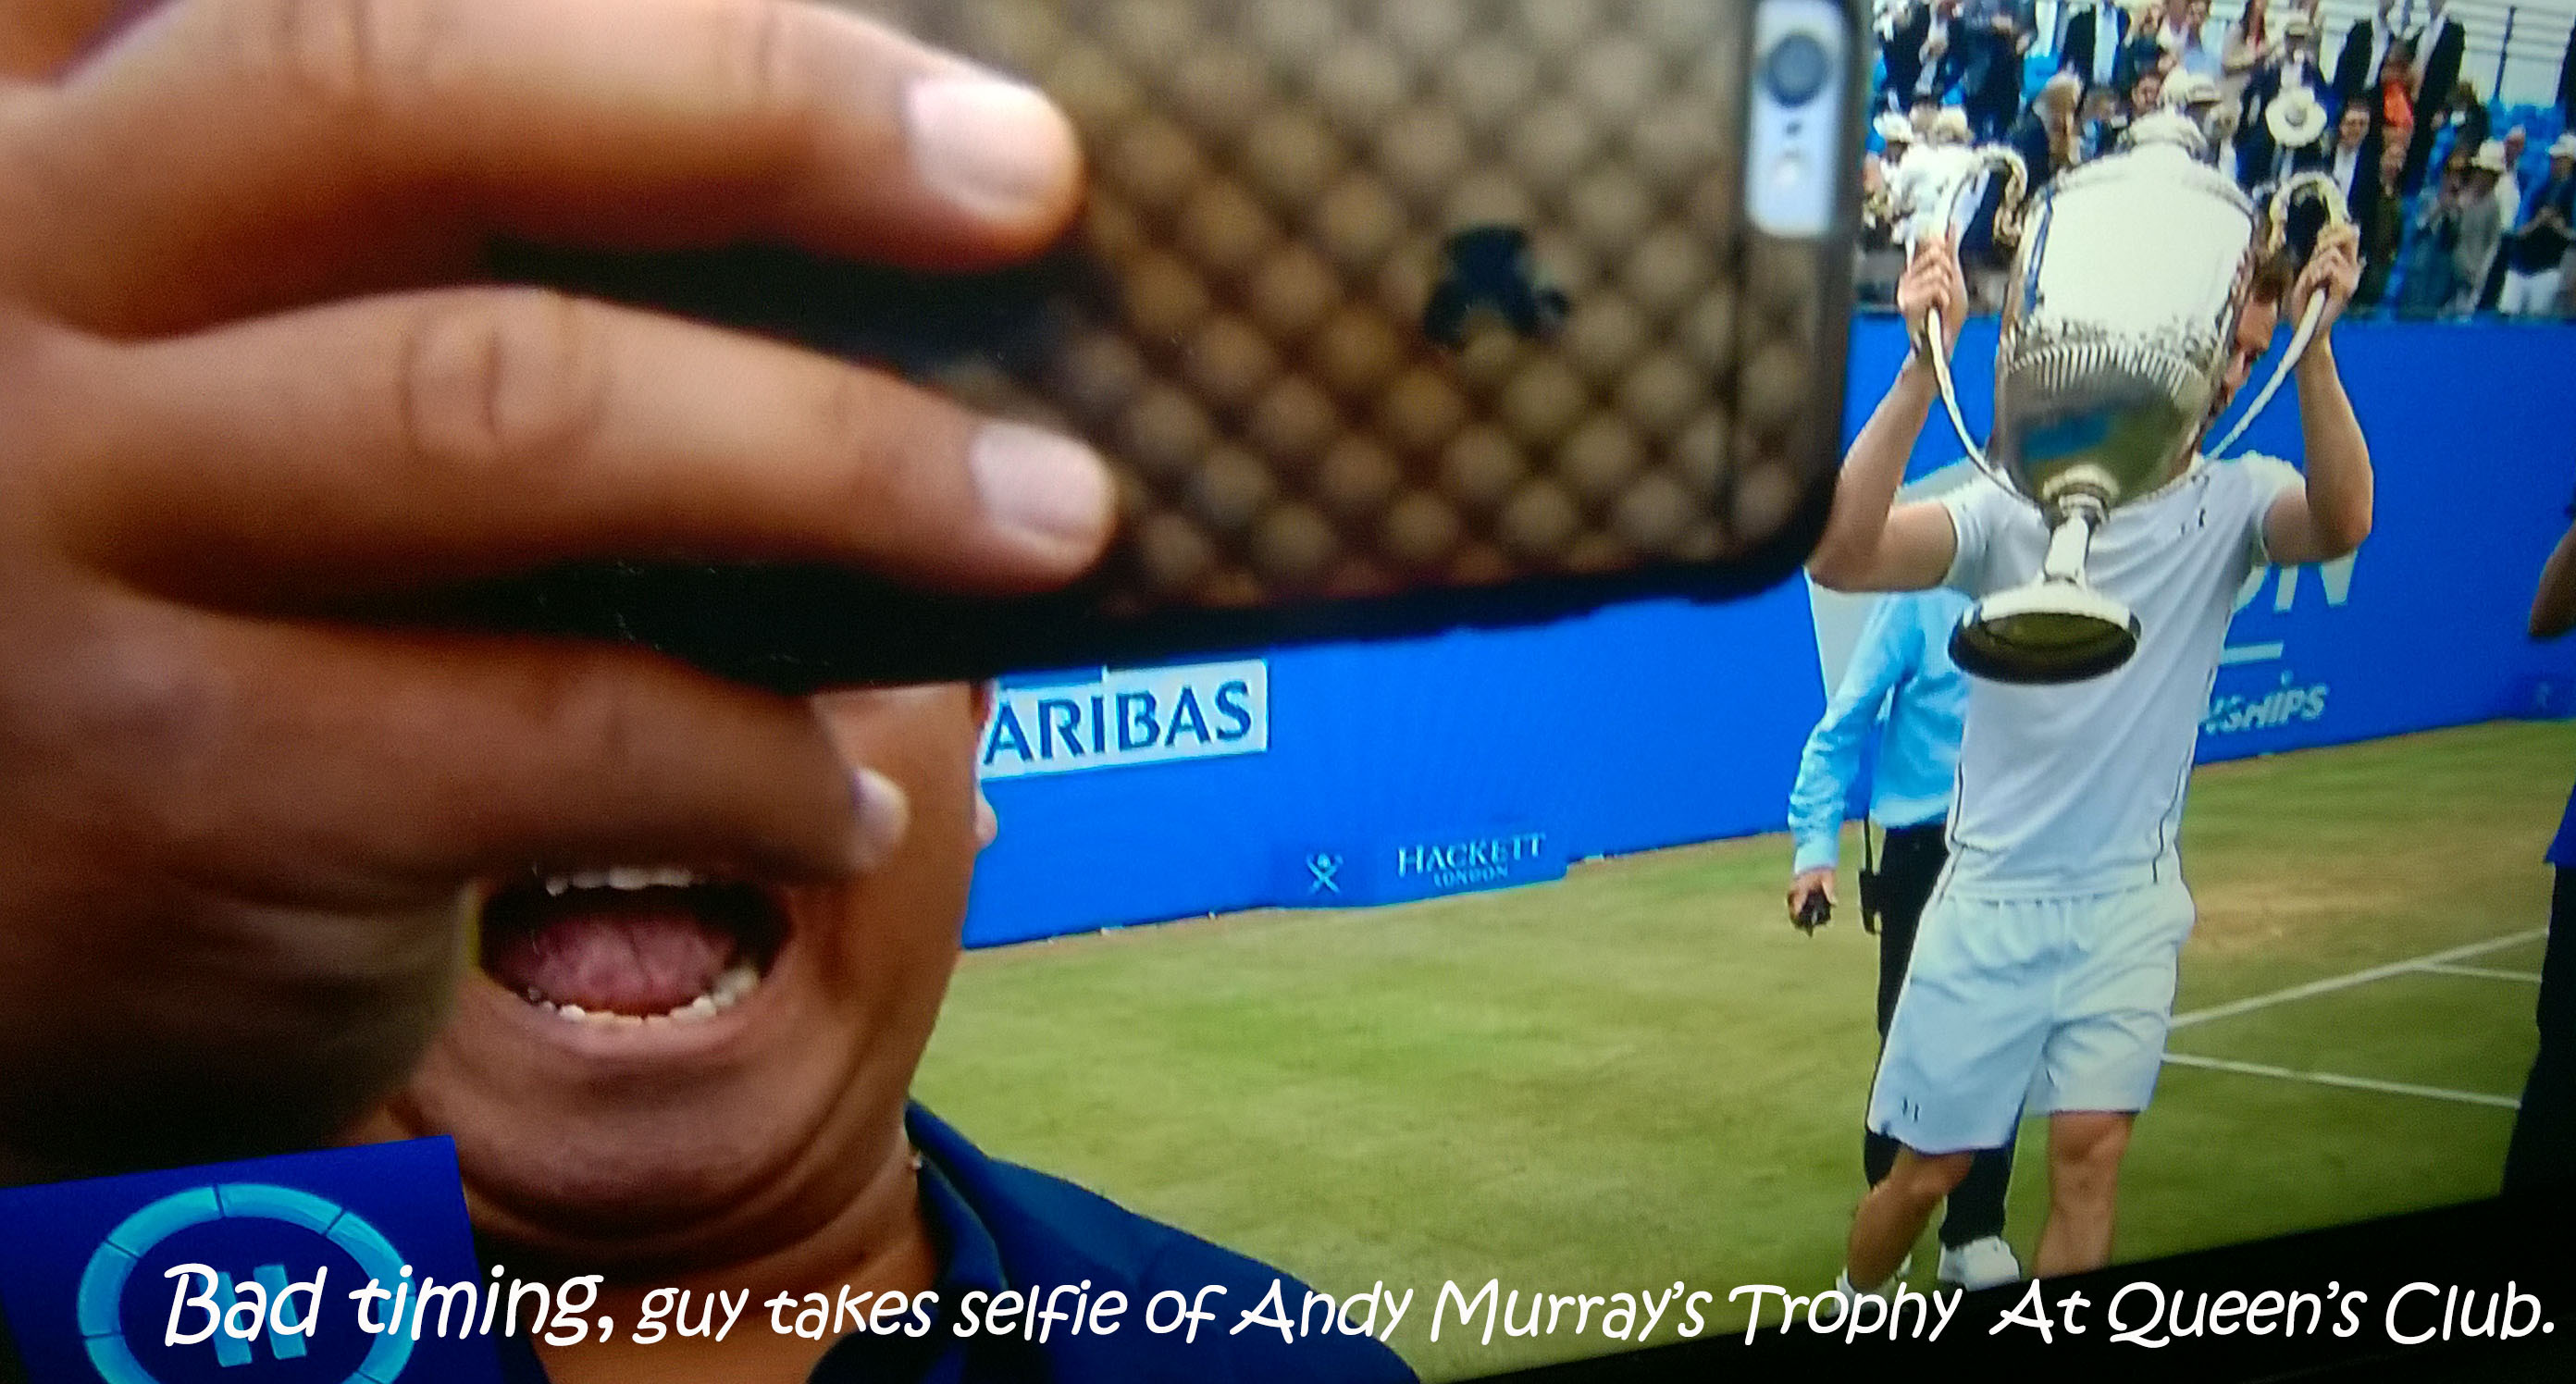  Selfie Gone Wrong, Andy Murray Queen's Club 2016